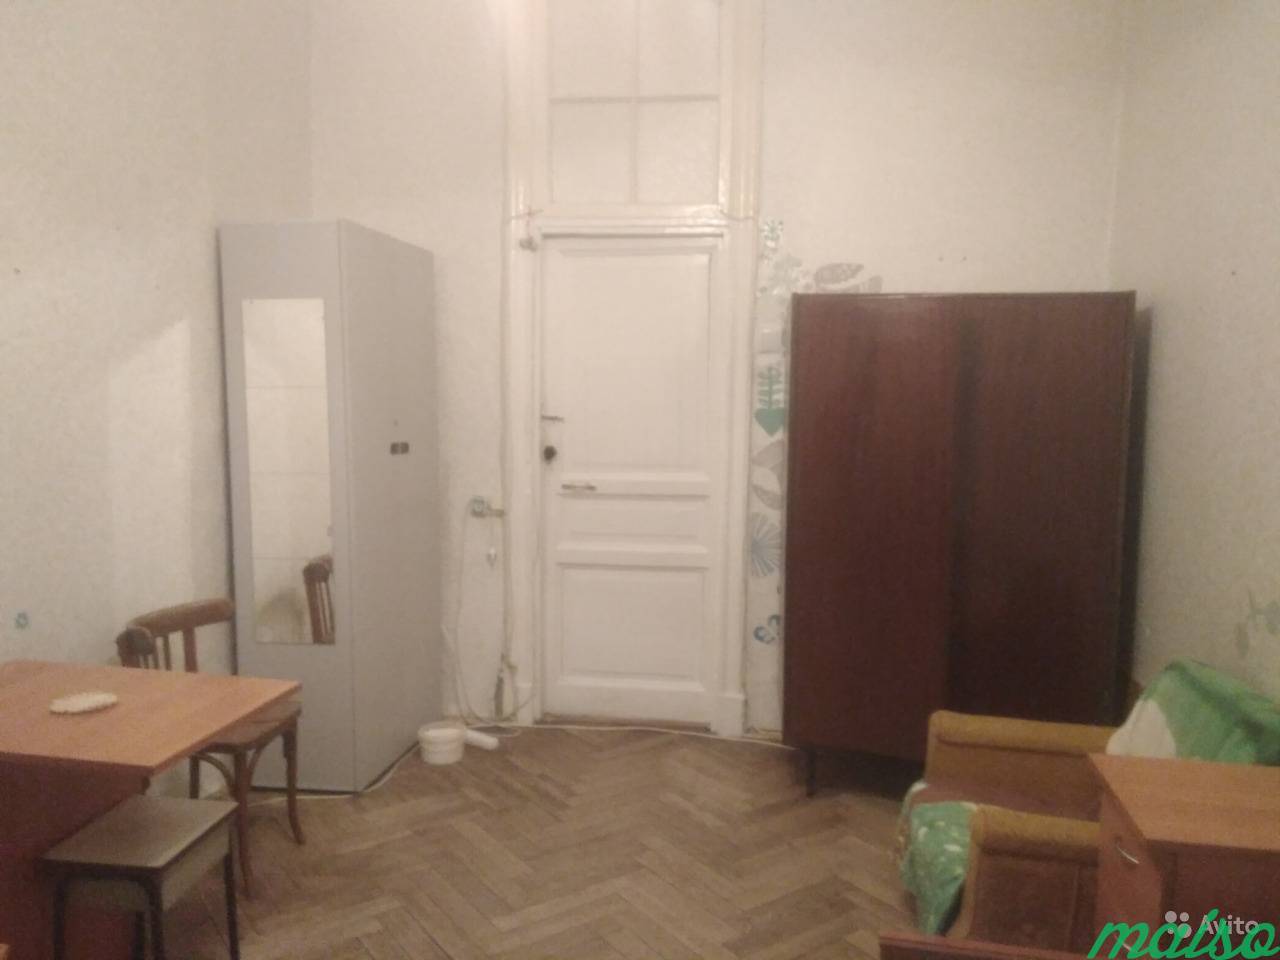 Комната 15.6 м² в 7-к, 2/6 эт. в Санкт-Петербурге. Фото 3